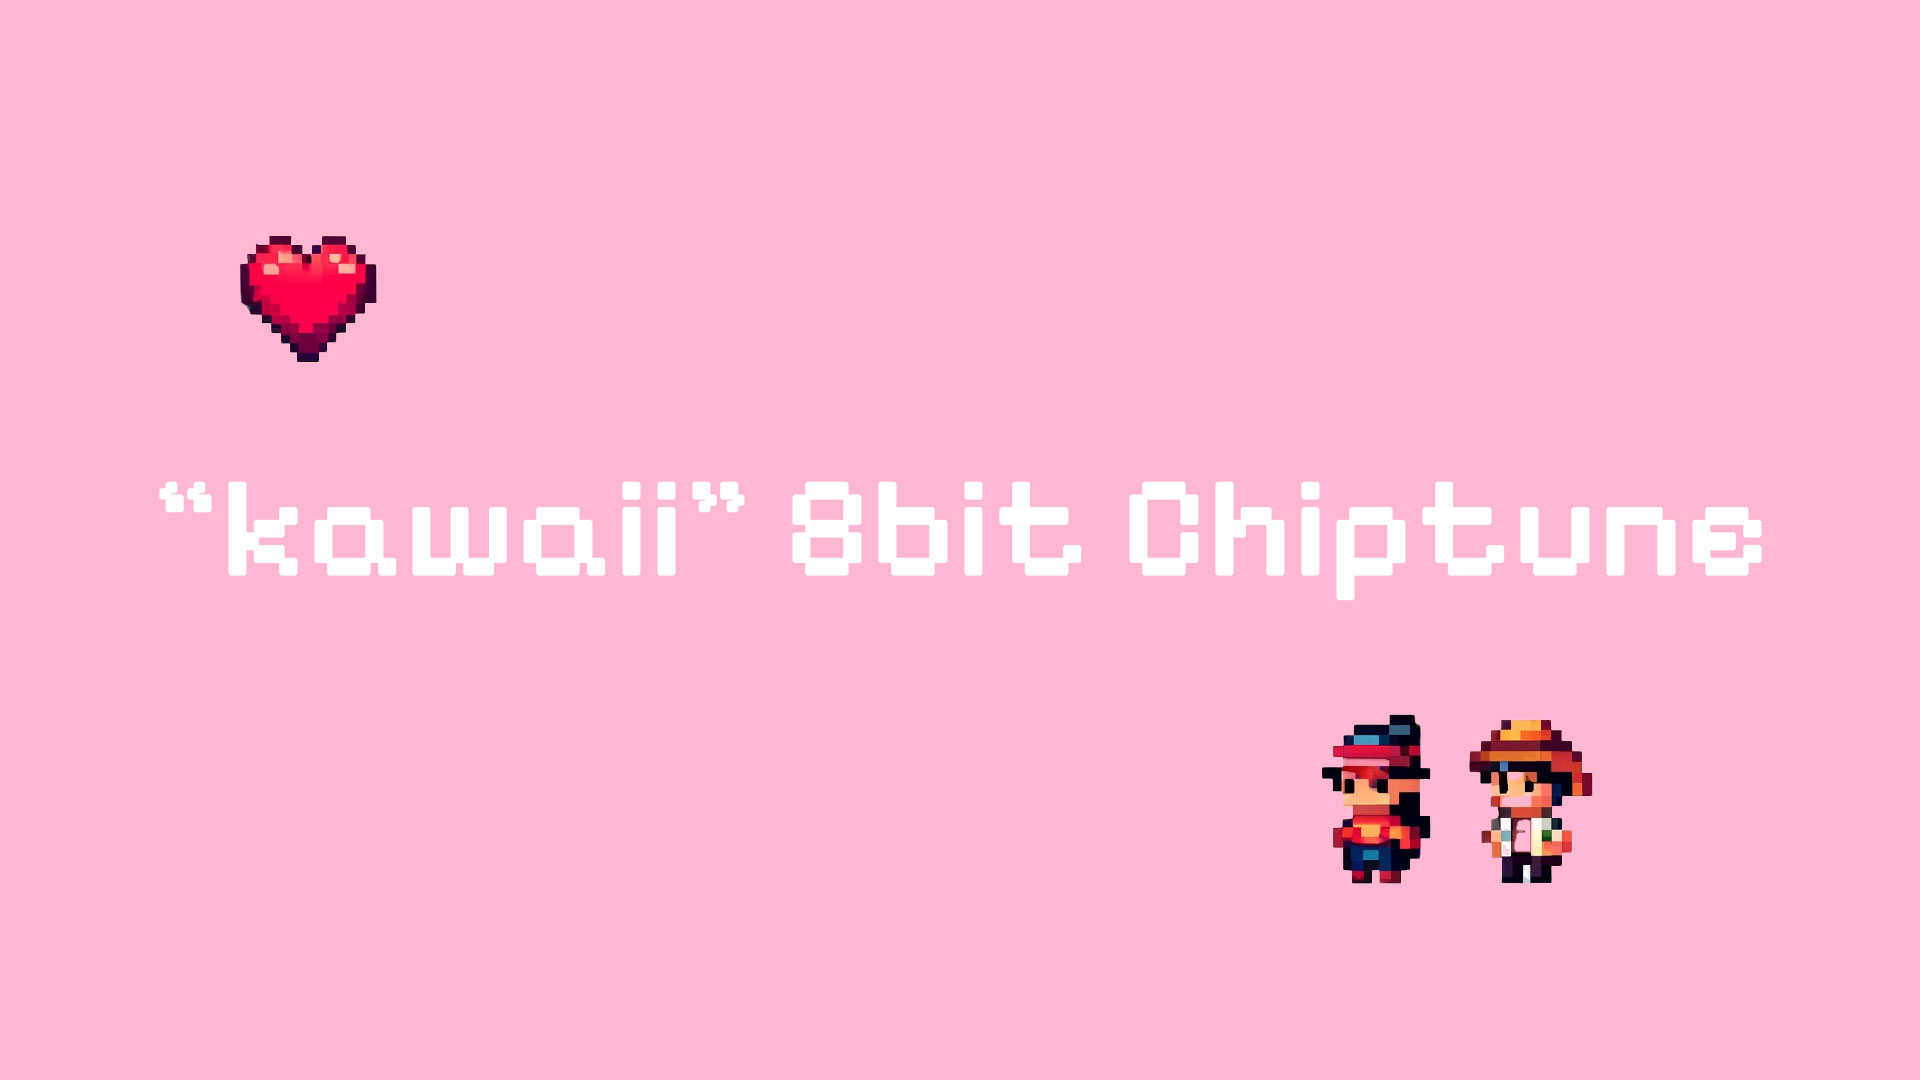 kawaii 8bit chiptune vol.001